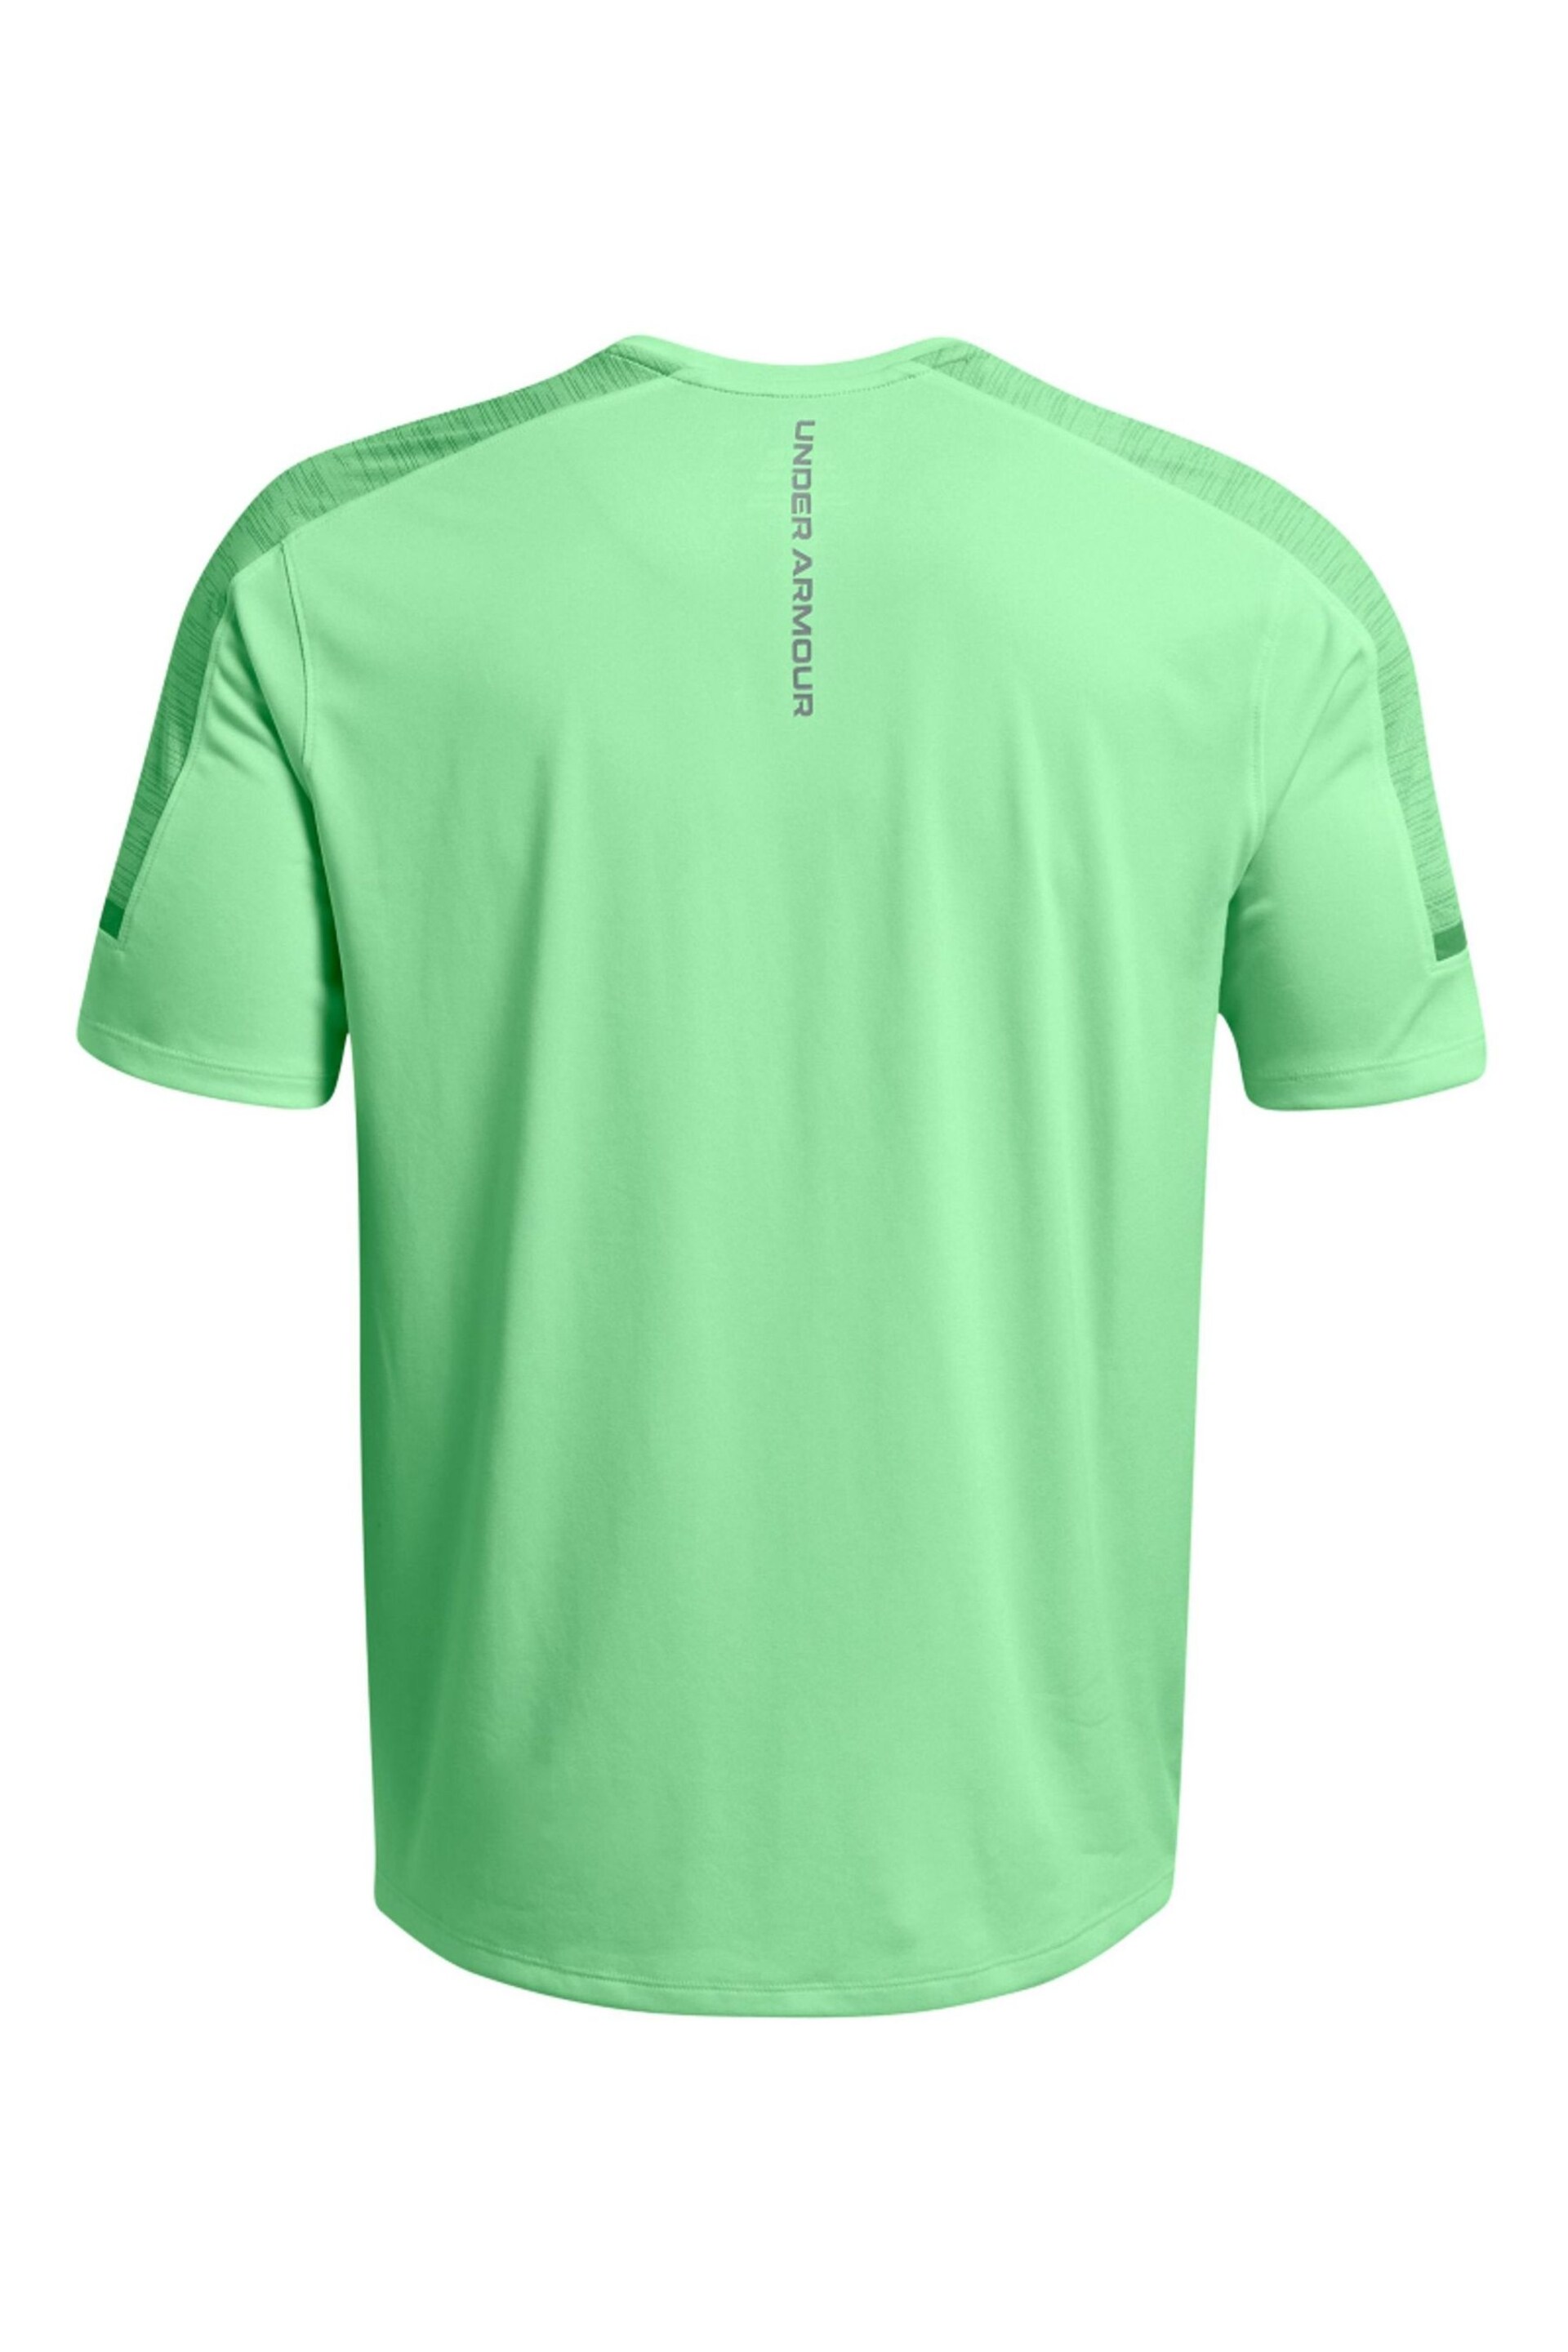 Under Armour Green/Grey Tech Short Sleeve Crew T-Shirt - Image 6 of 6